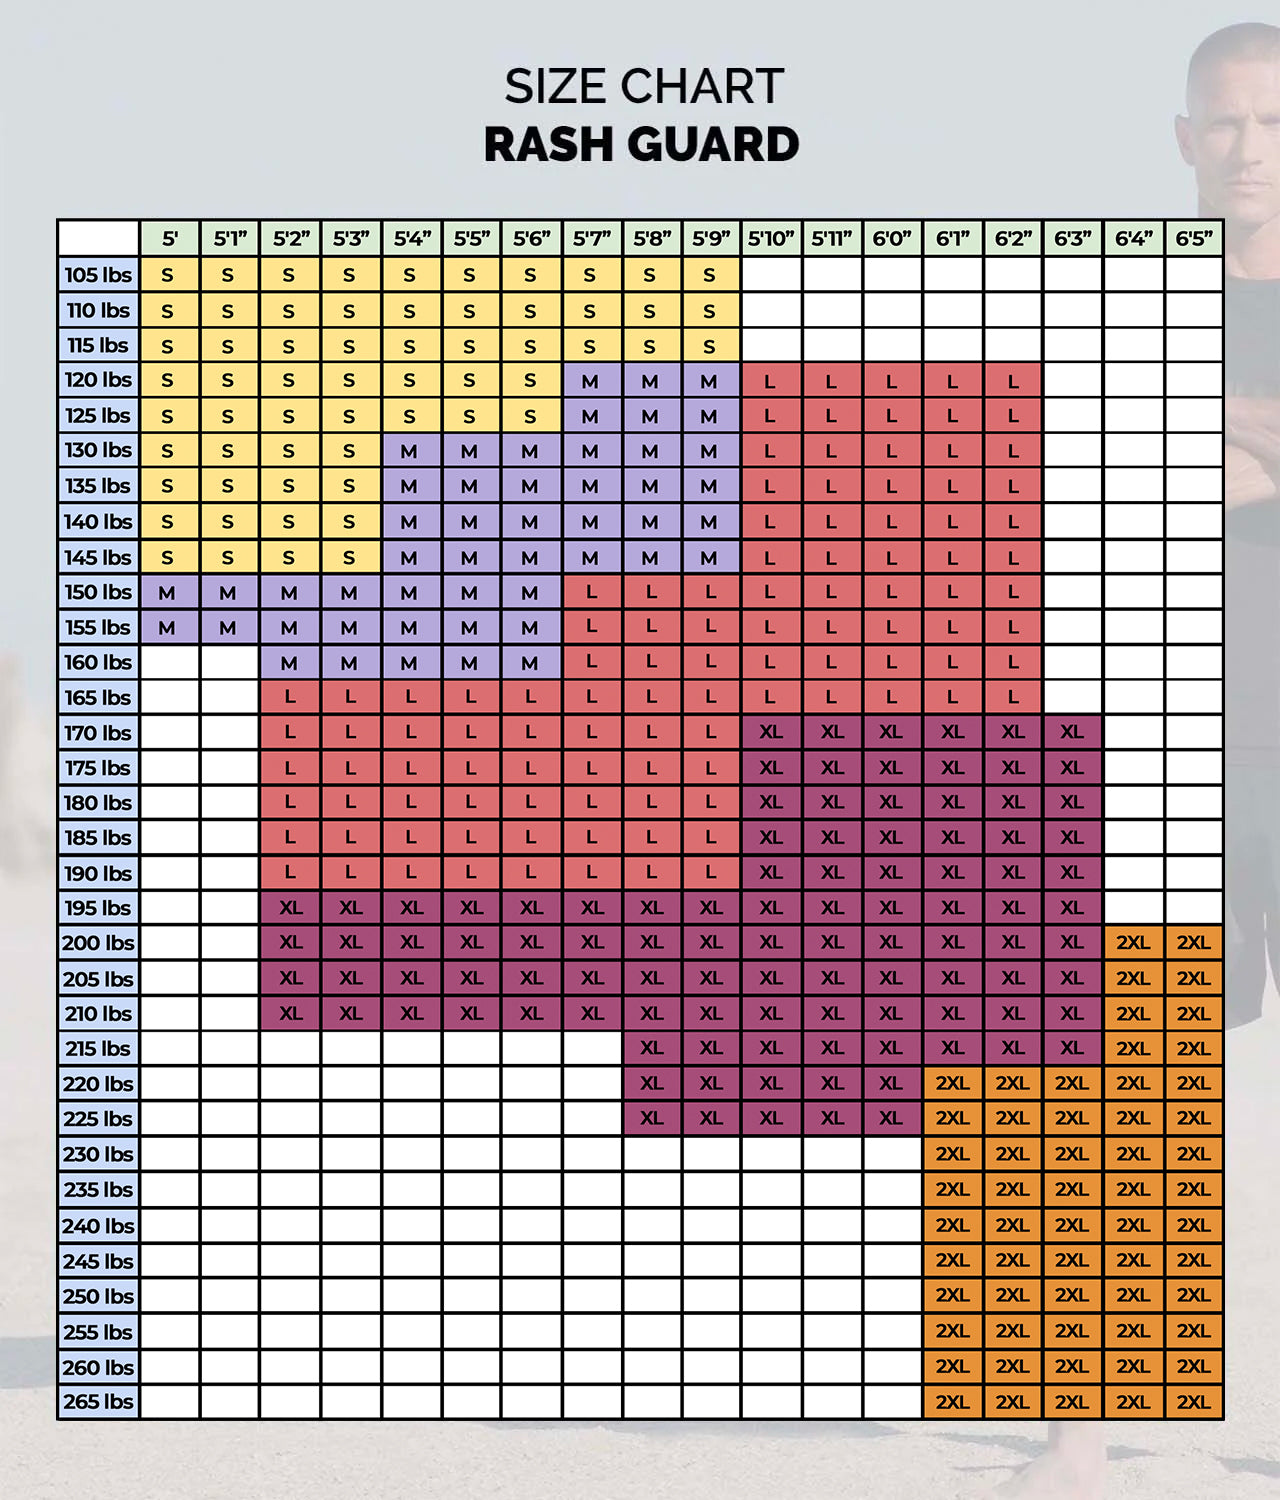 Men's Standard Purple Long Sleeve Training Rash Guard